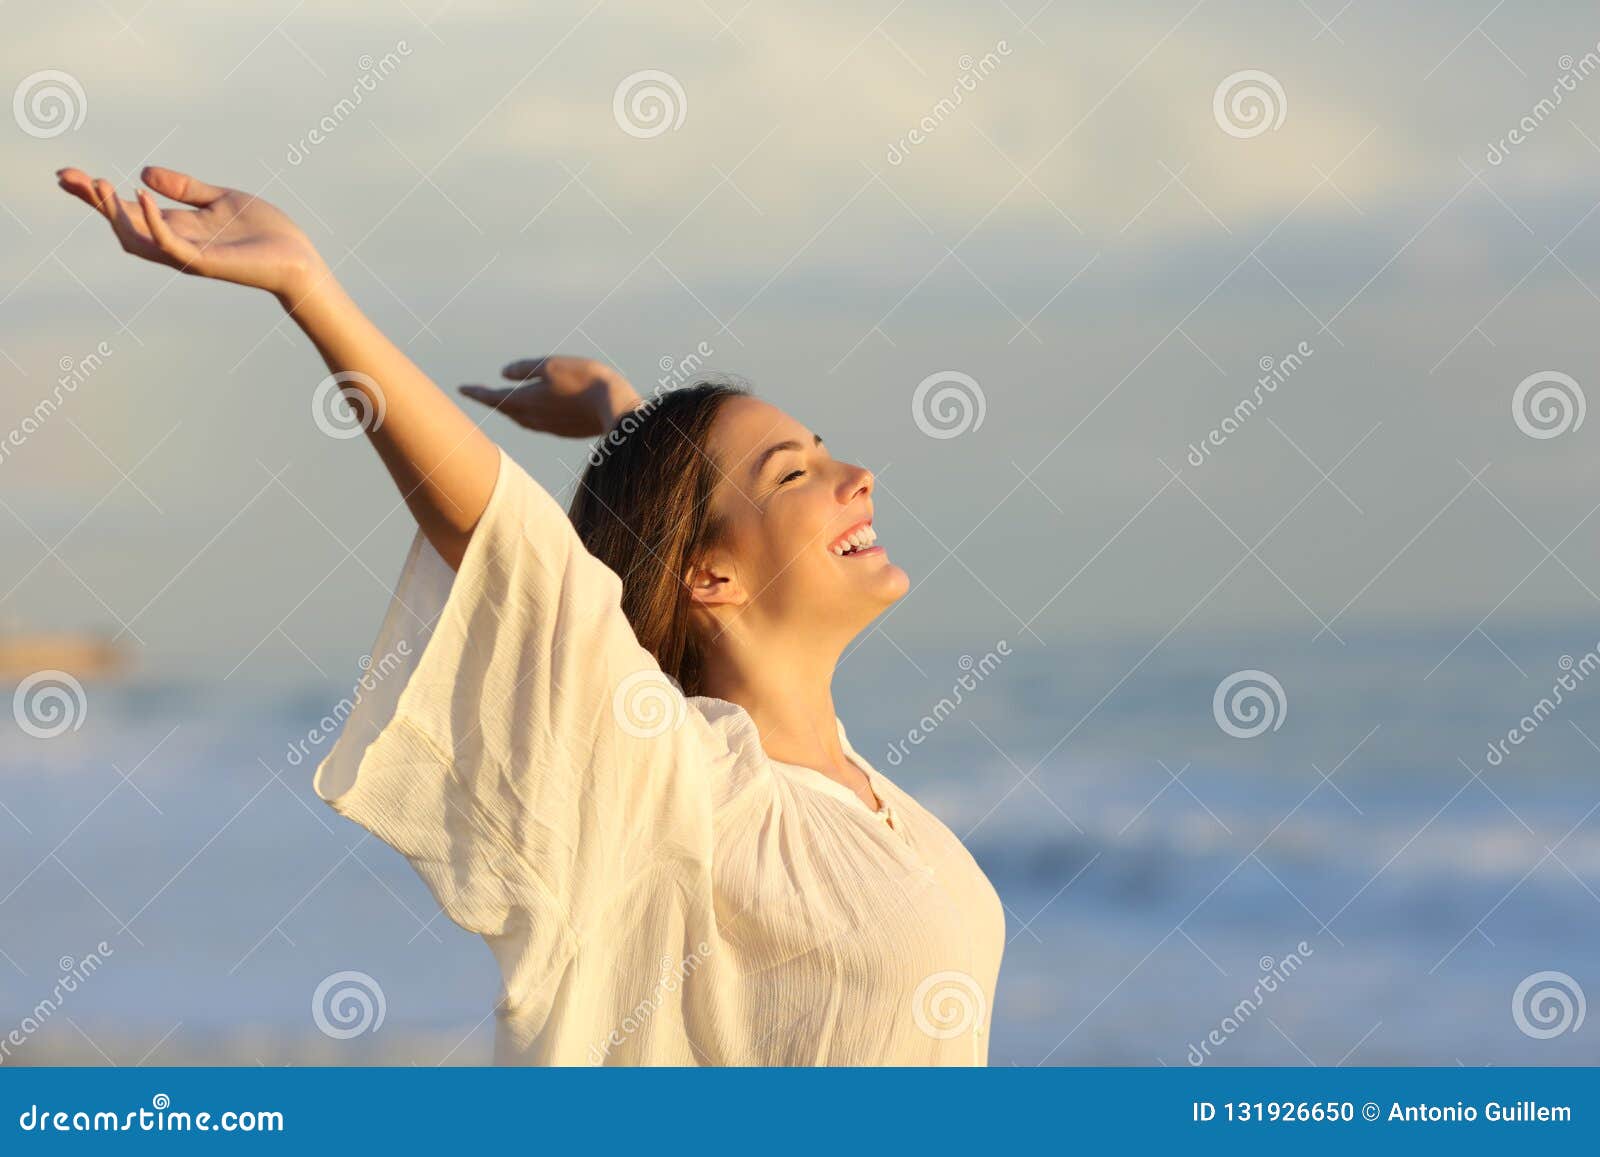 joyful woman enjoying a day on the beach